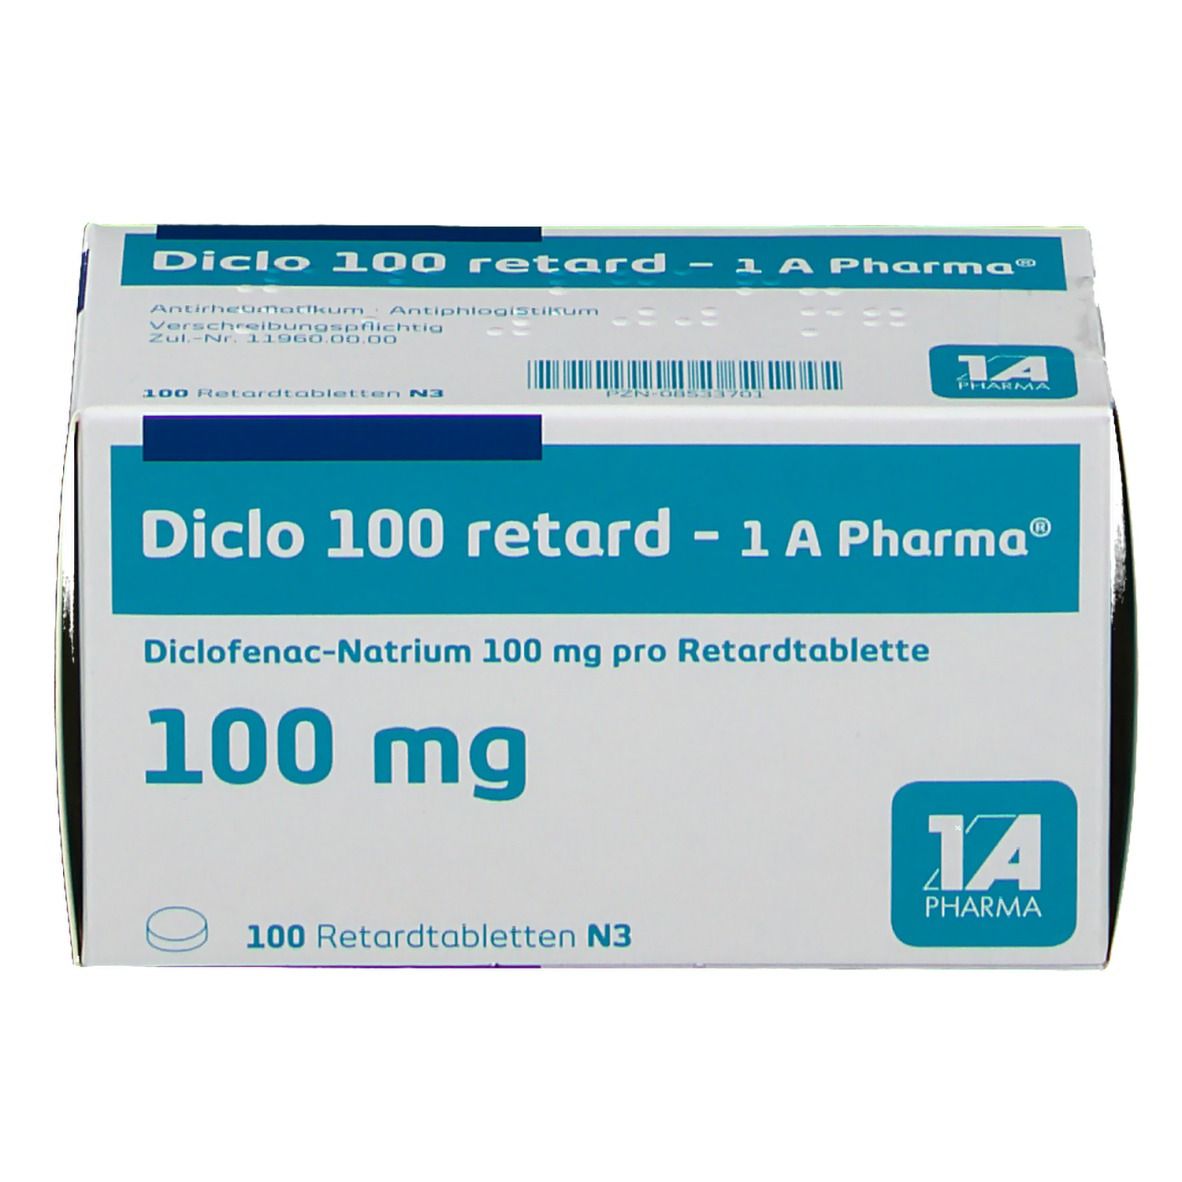 Diclo 100 ard 1A Pharma®